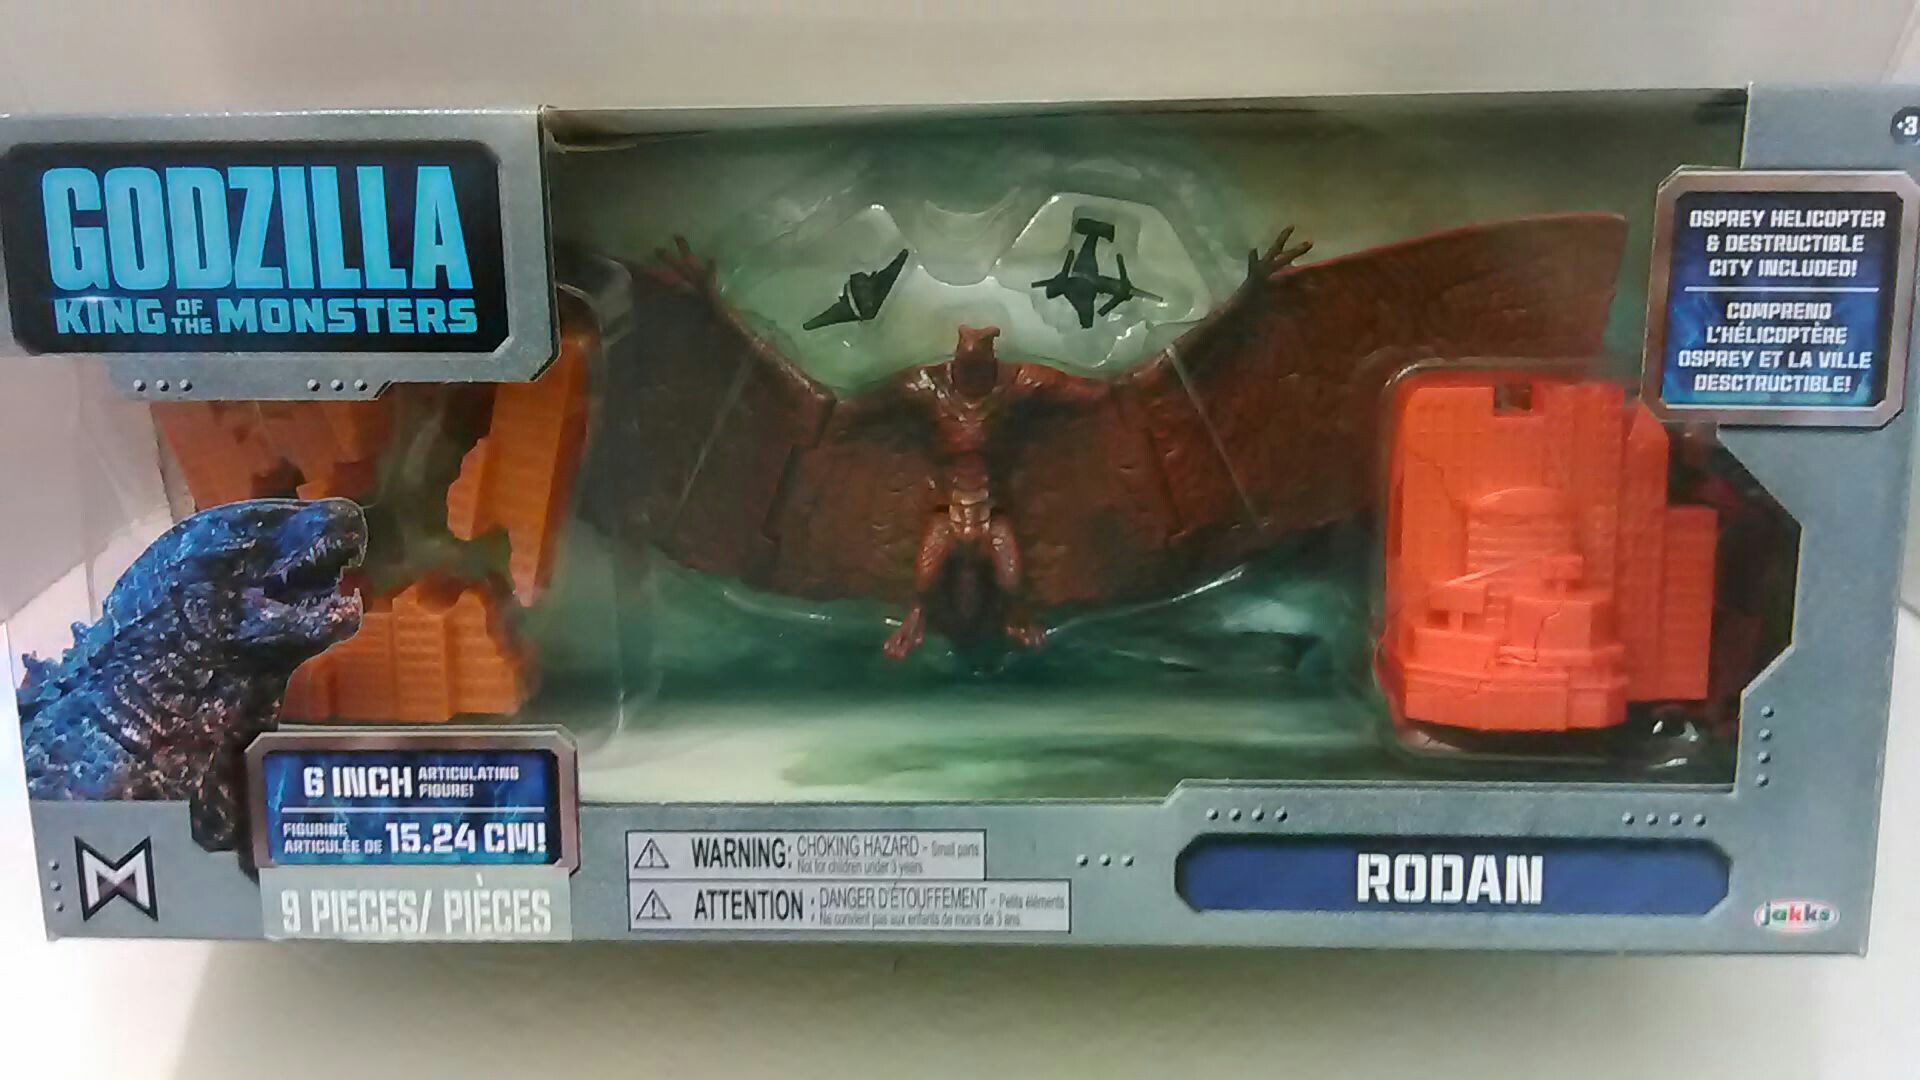 Godzilla King of the Monsters -- "Rodan Action Figure" -- 9 peace Set